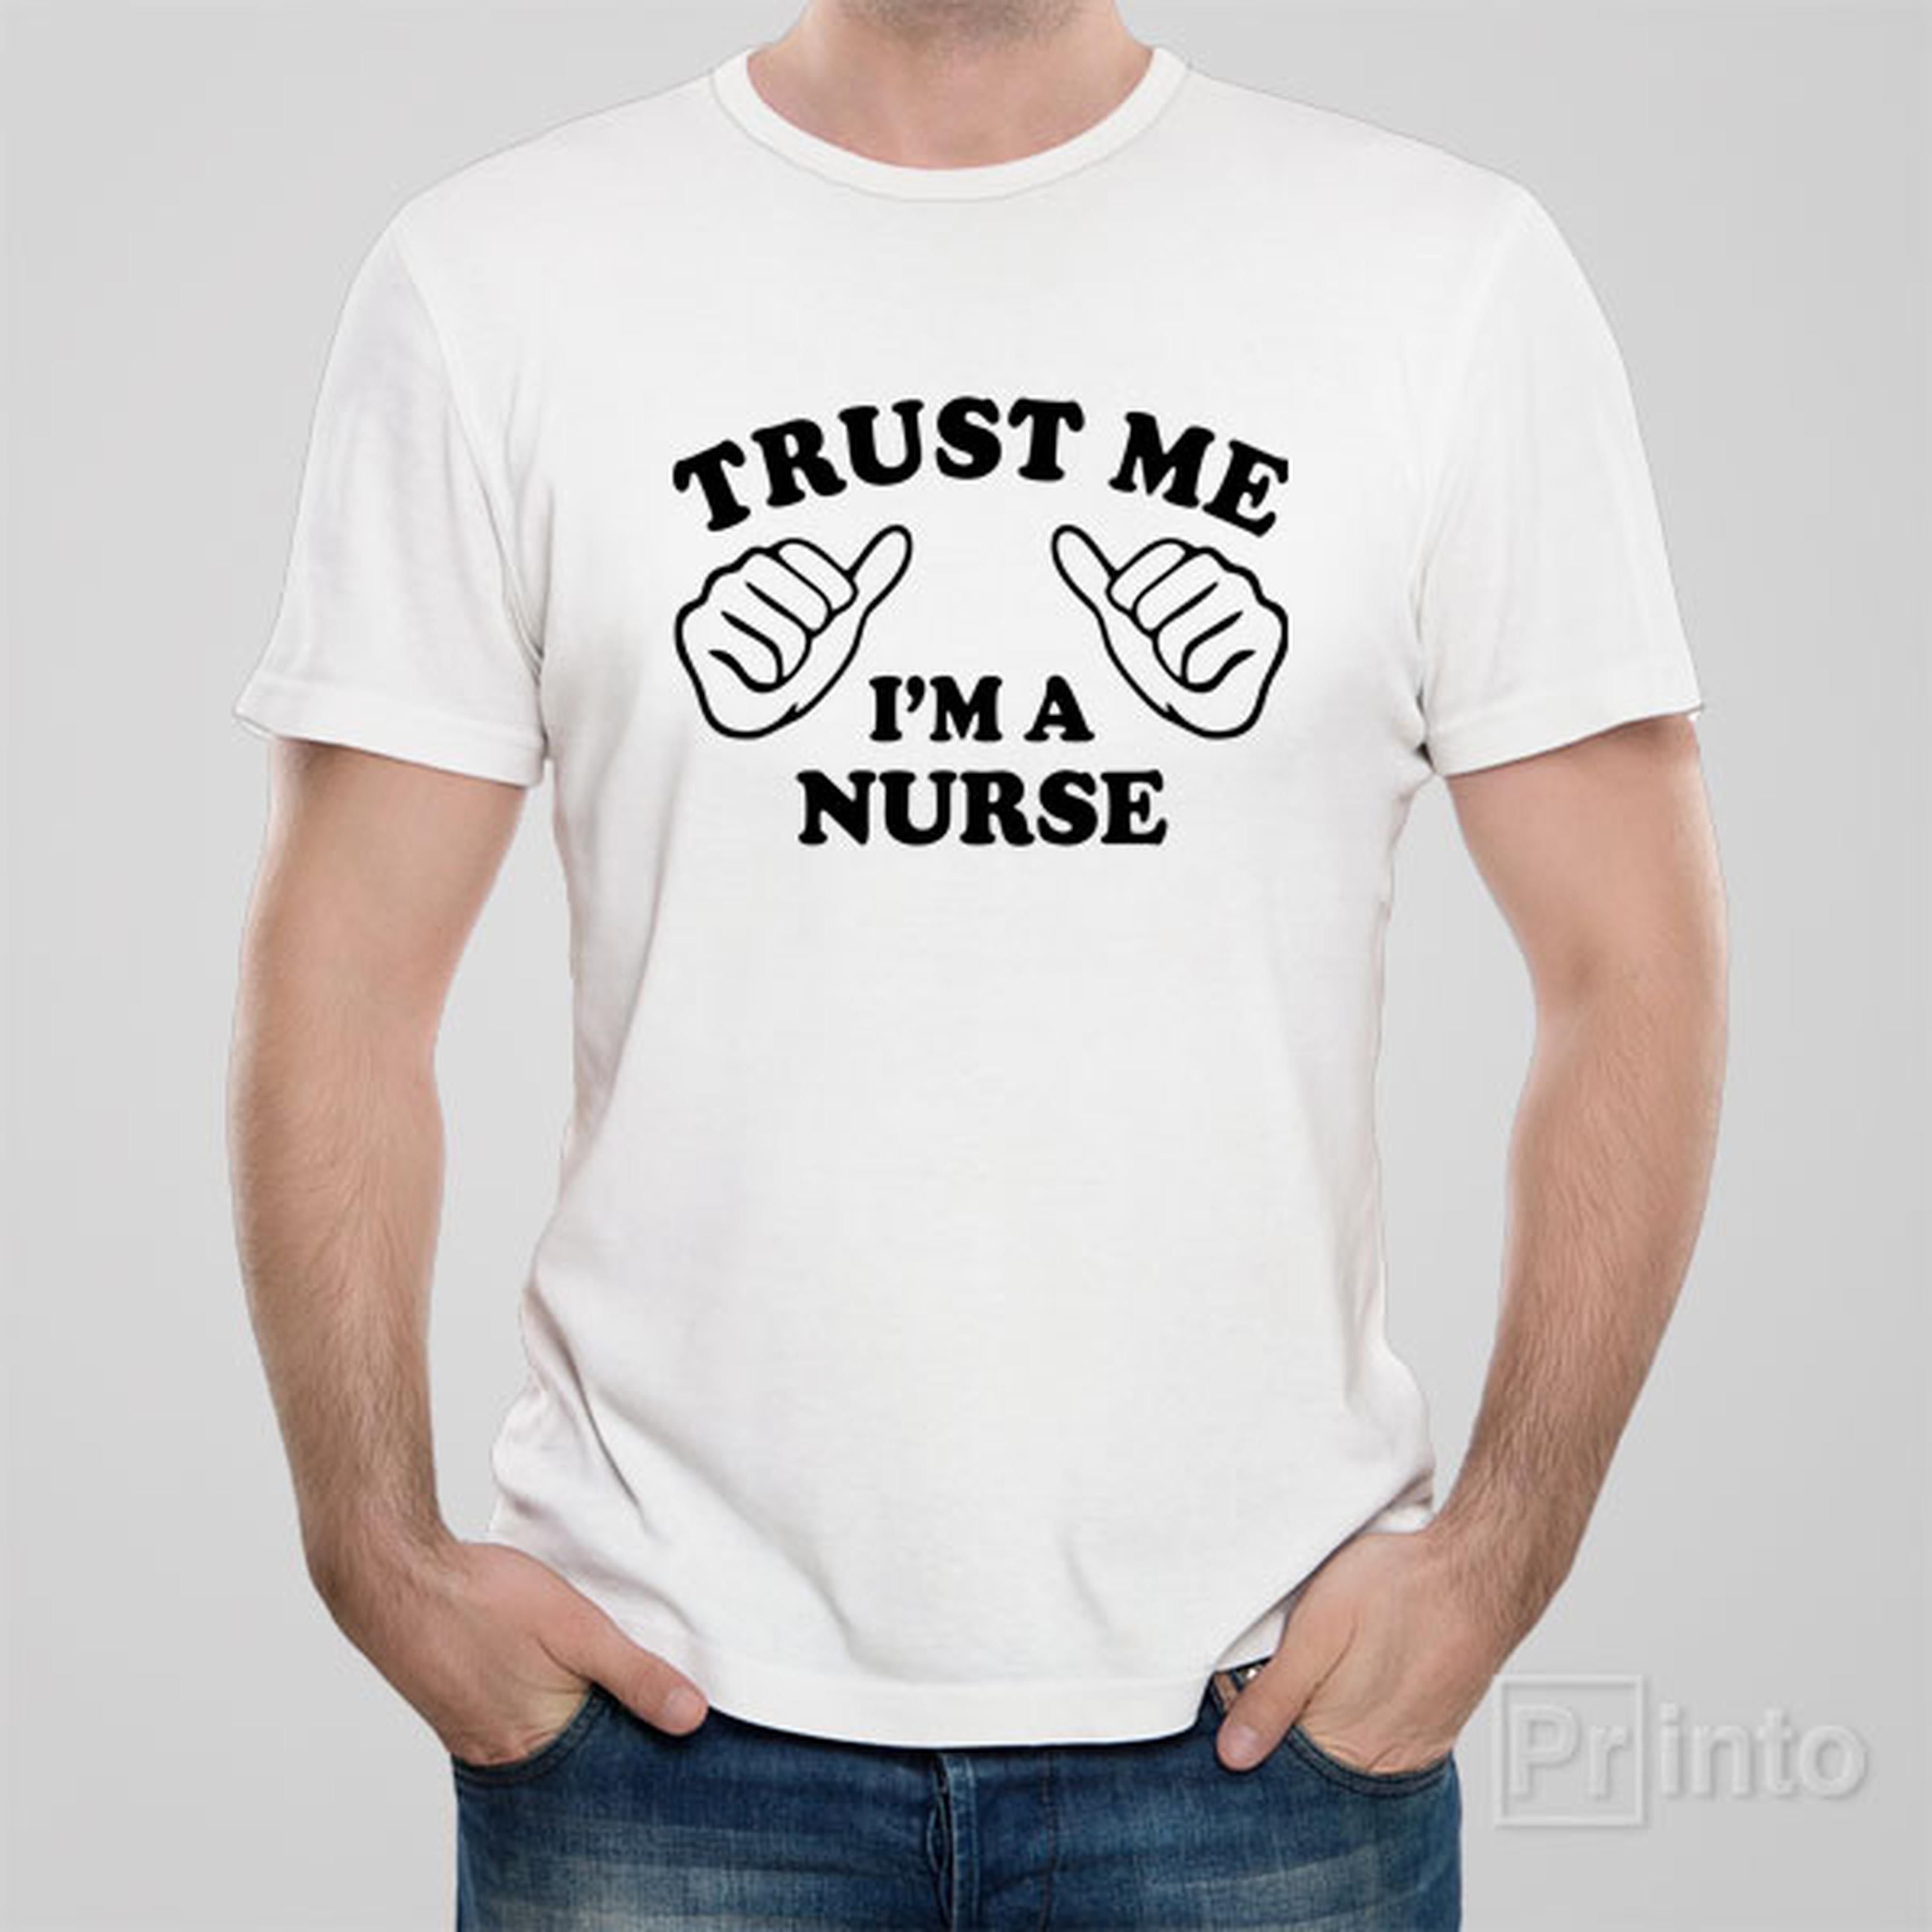 trust-me-i-am-a-nurse-t-shirt